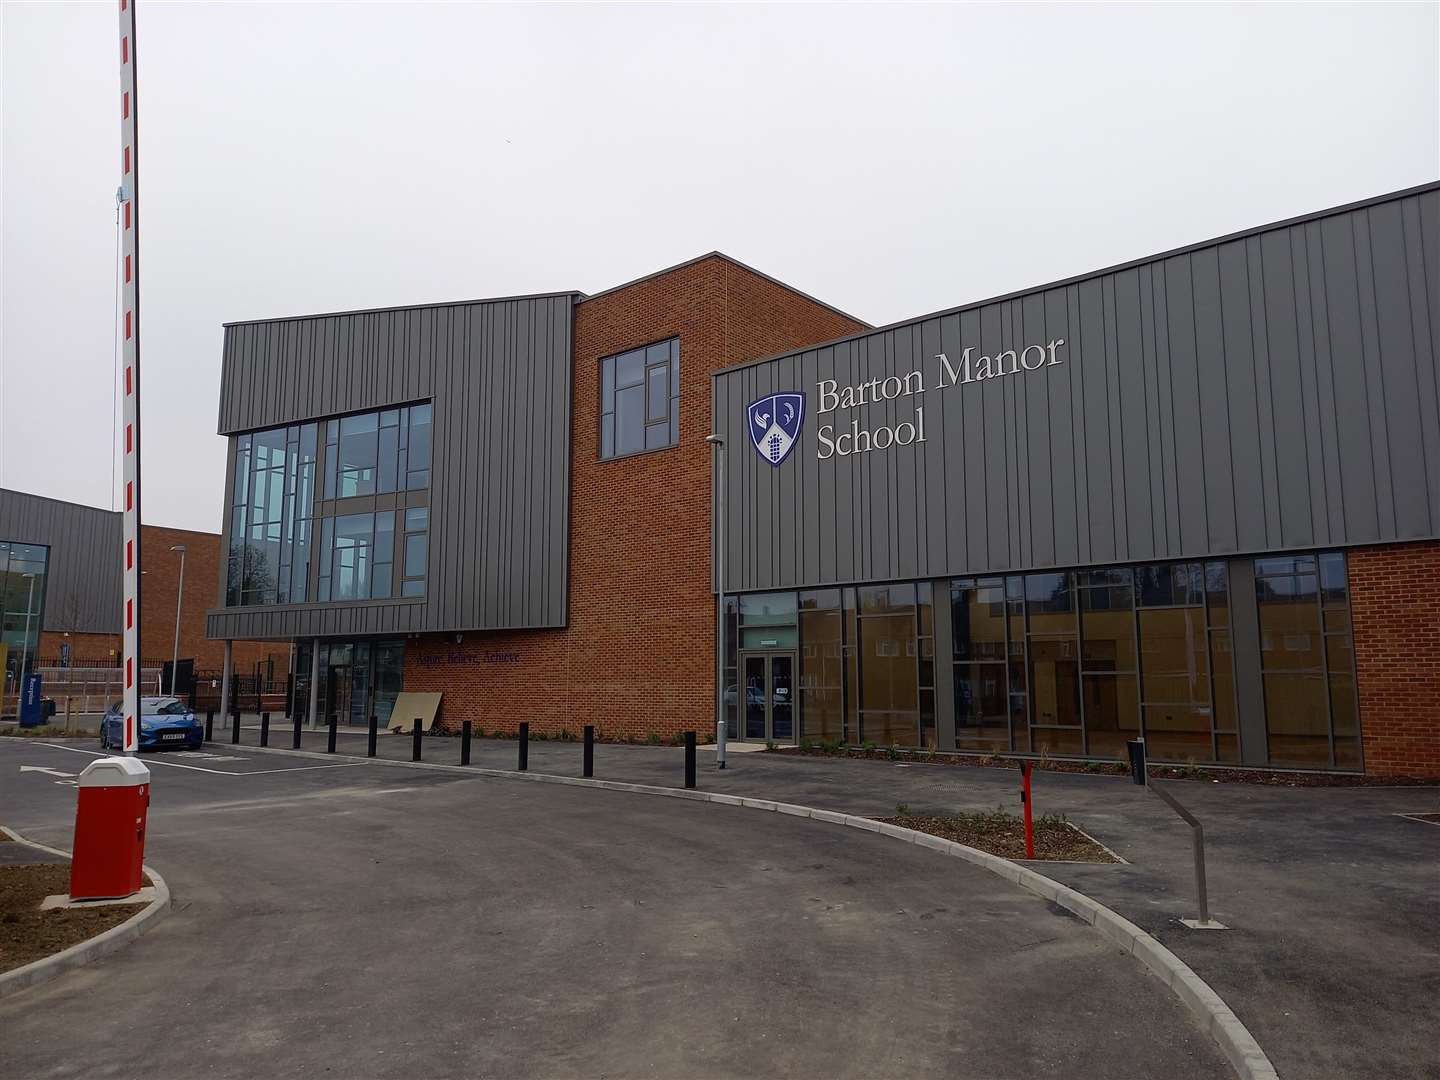 The new Barton Manor School will open in September